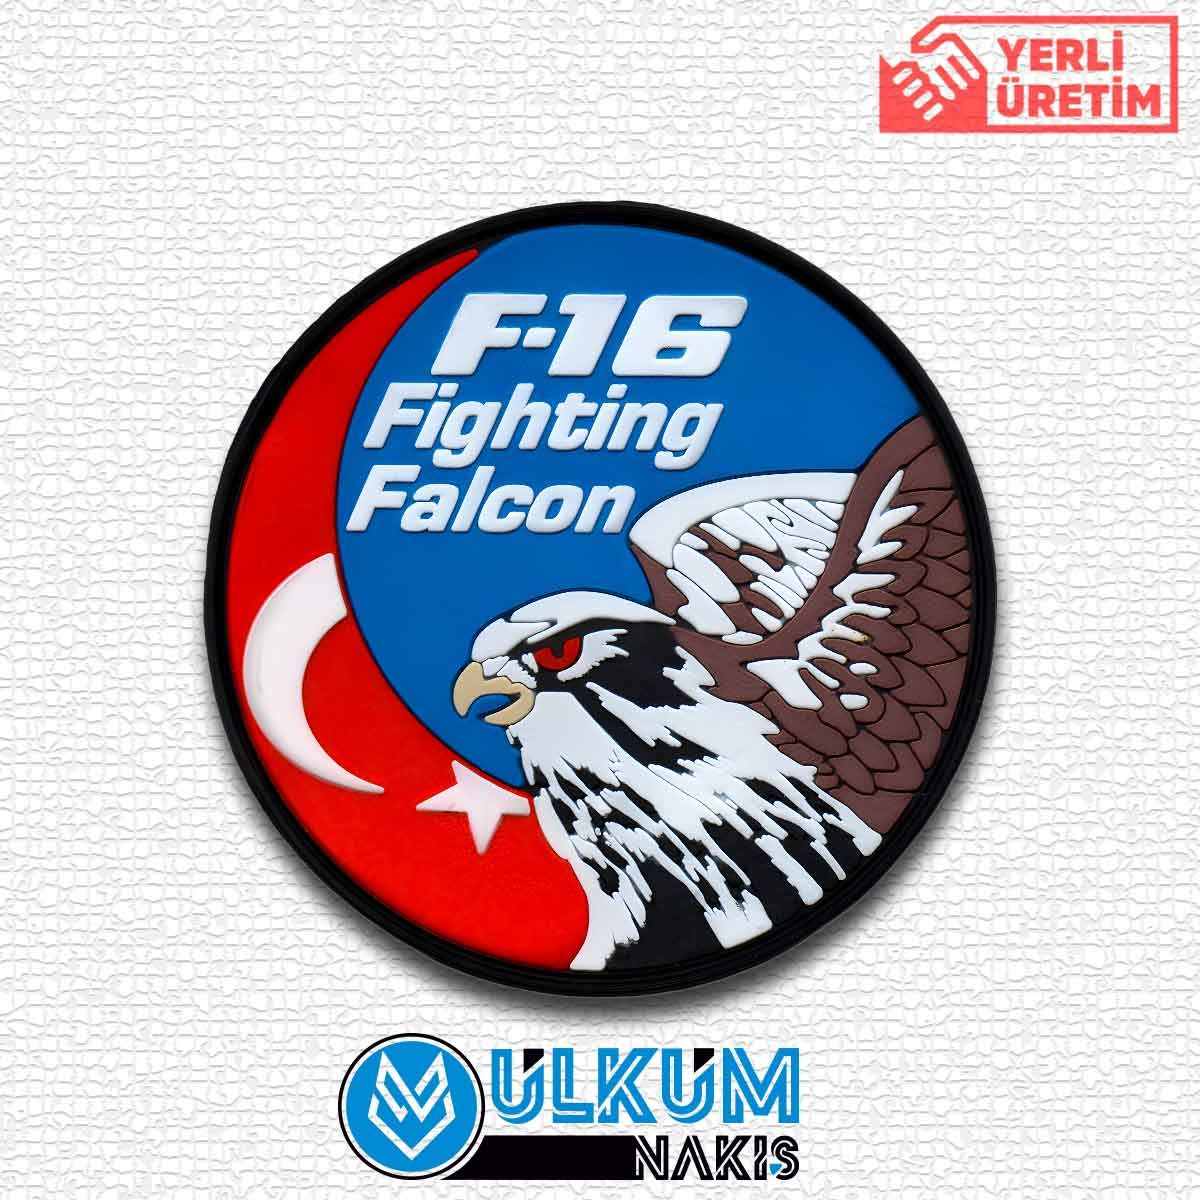 F-16 Fighting Falcon Pvc Patch